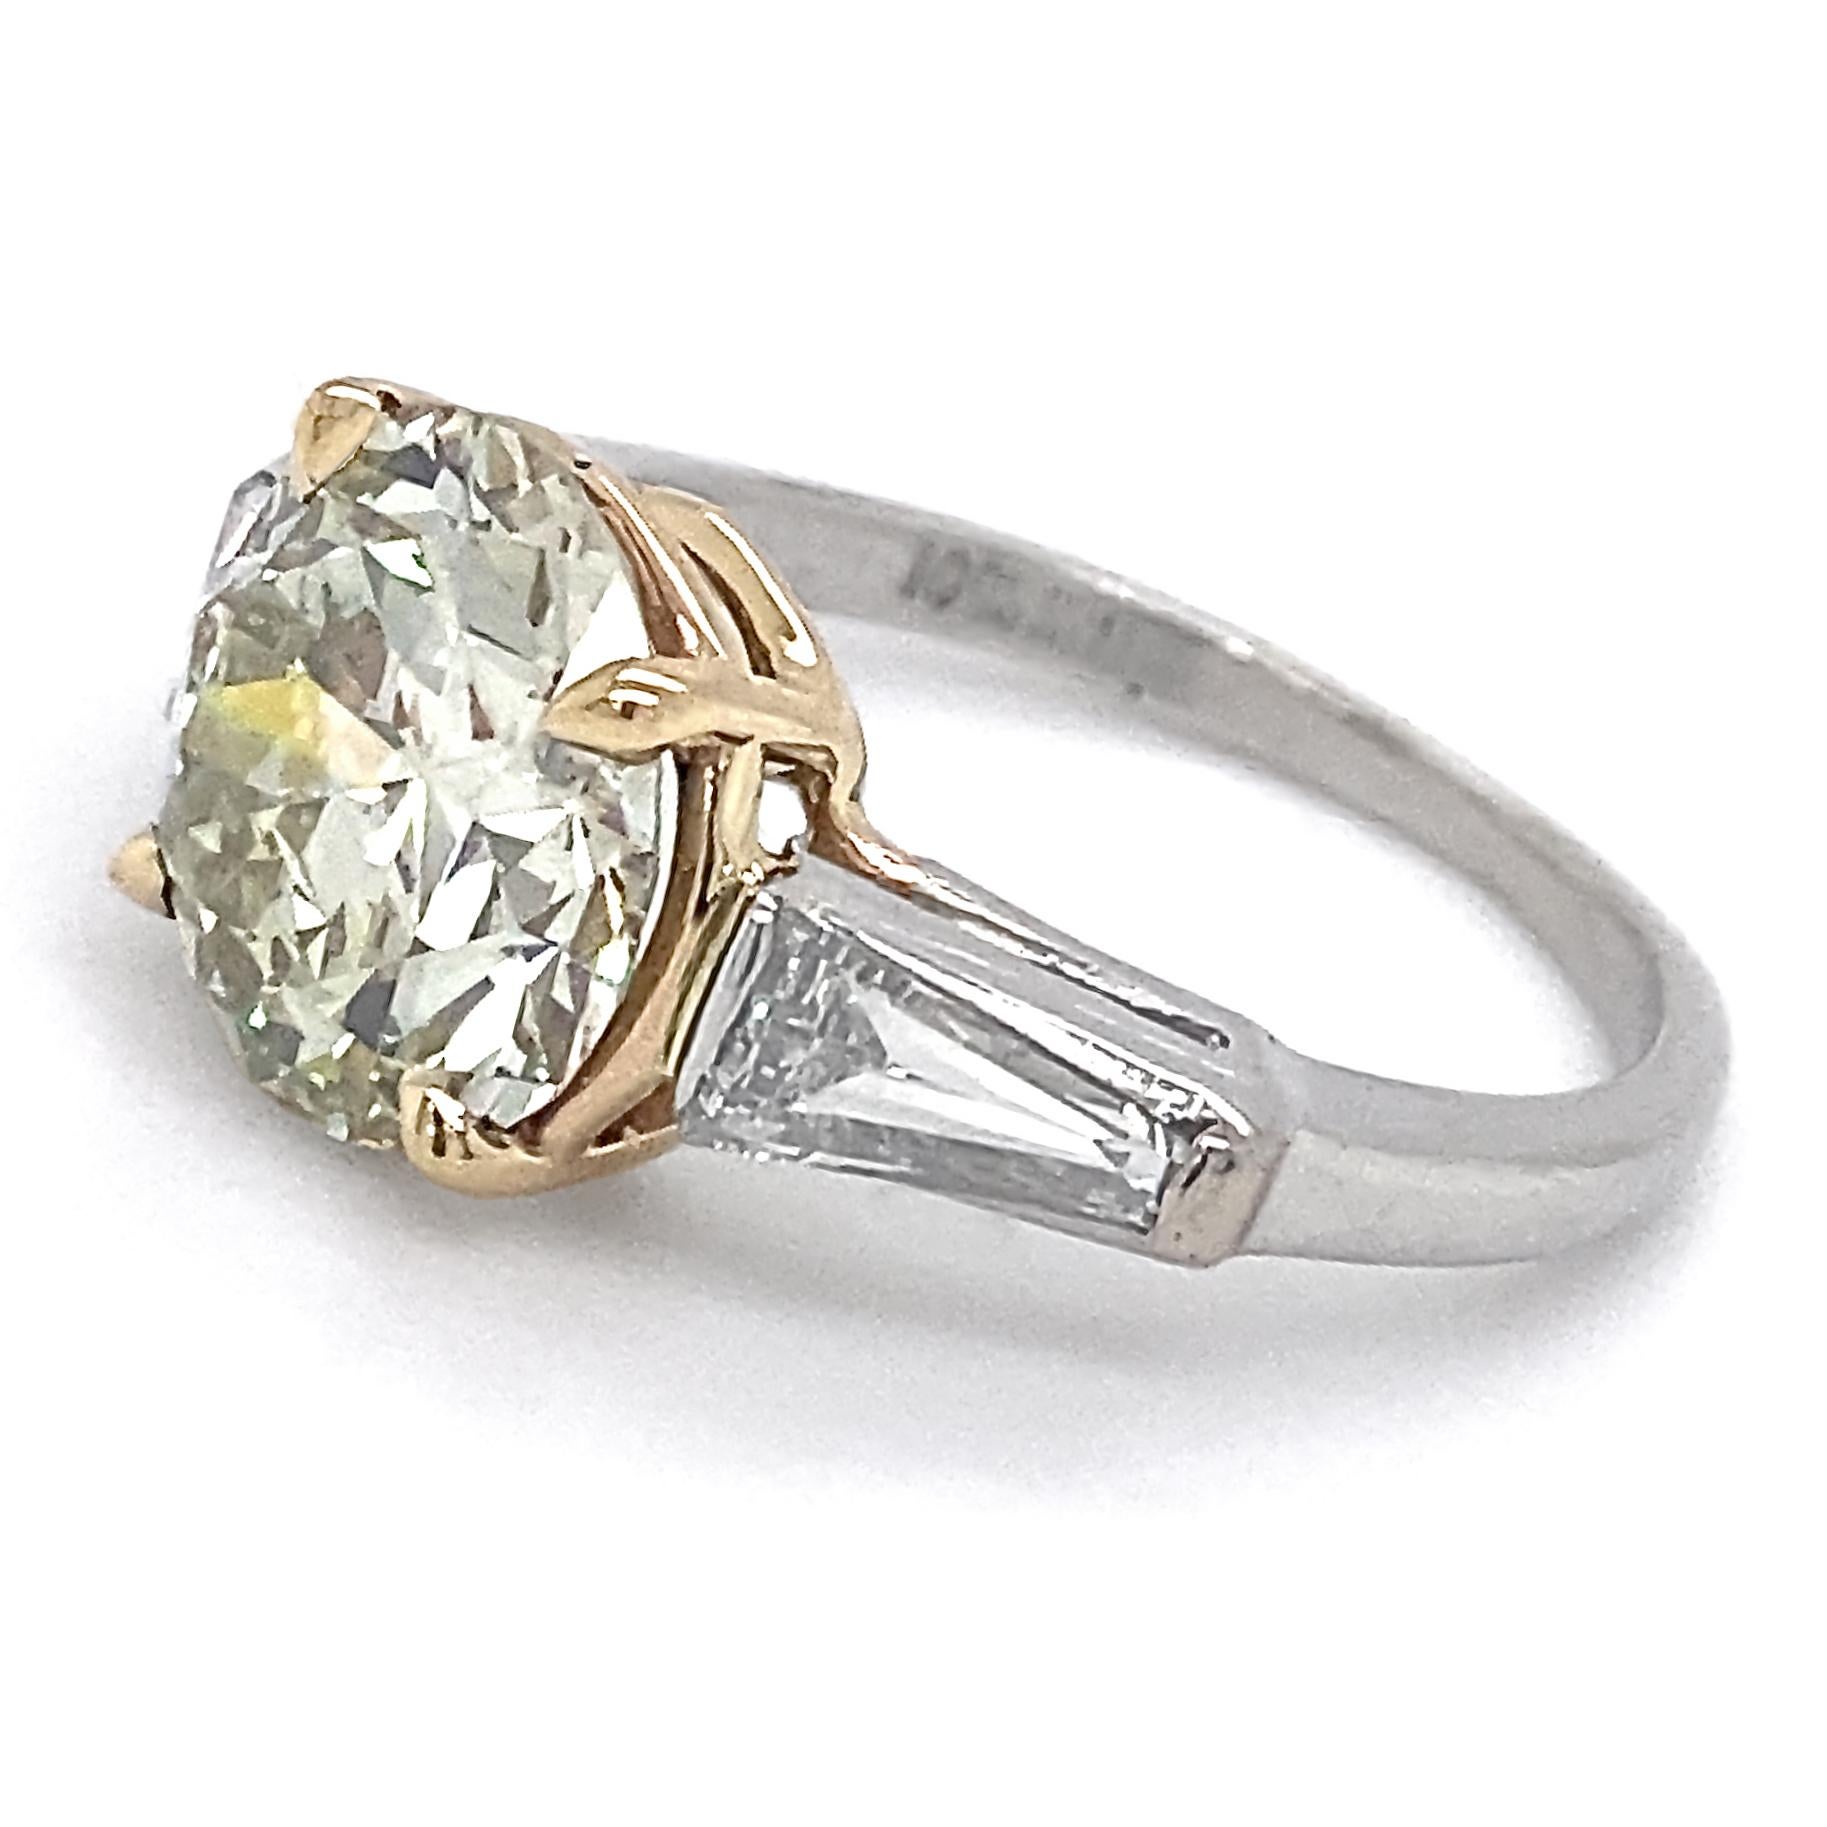 Certified 3.16 Carat Transitional Cut Diamond in Platinum & Gold 3-Stone Ring 5